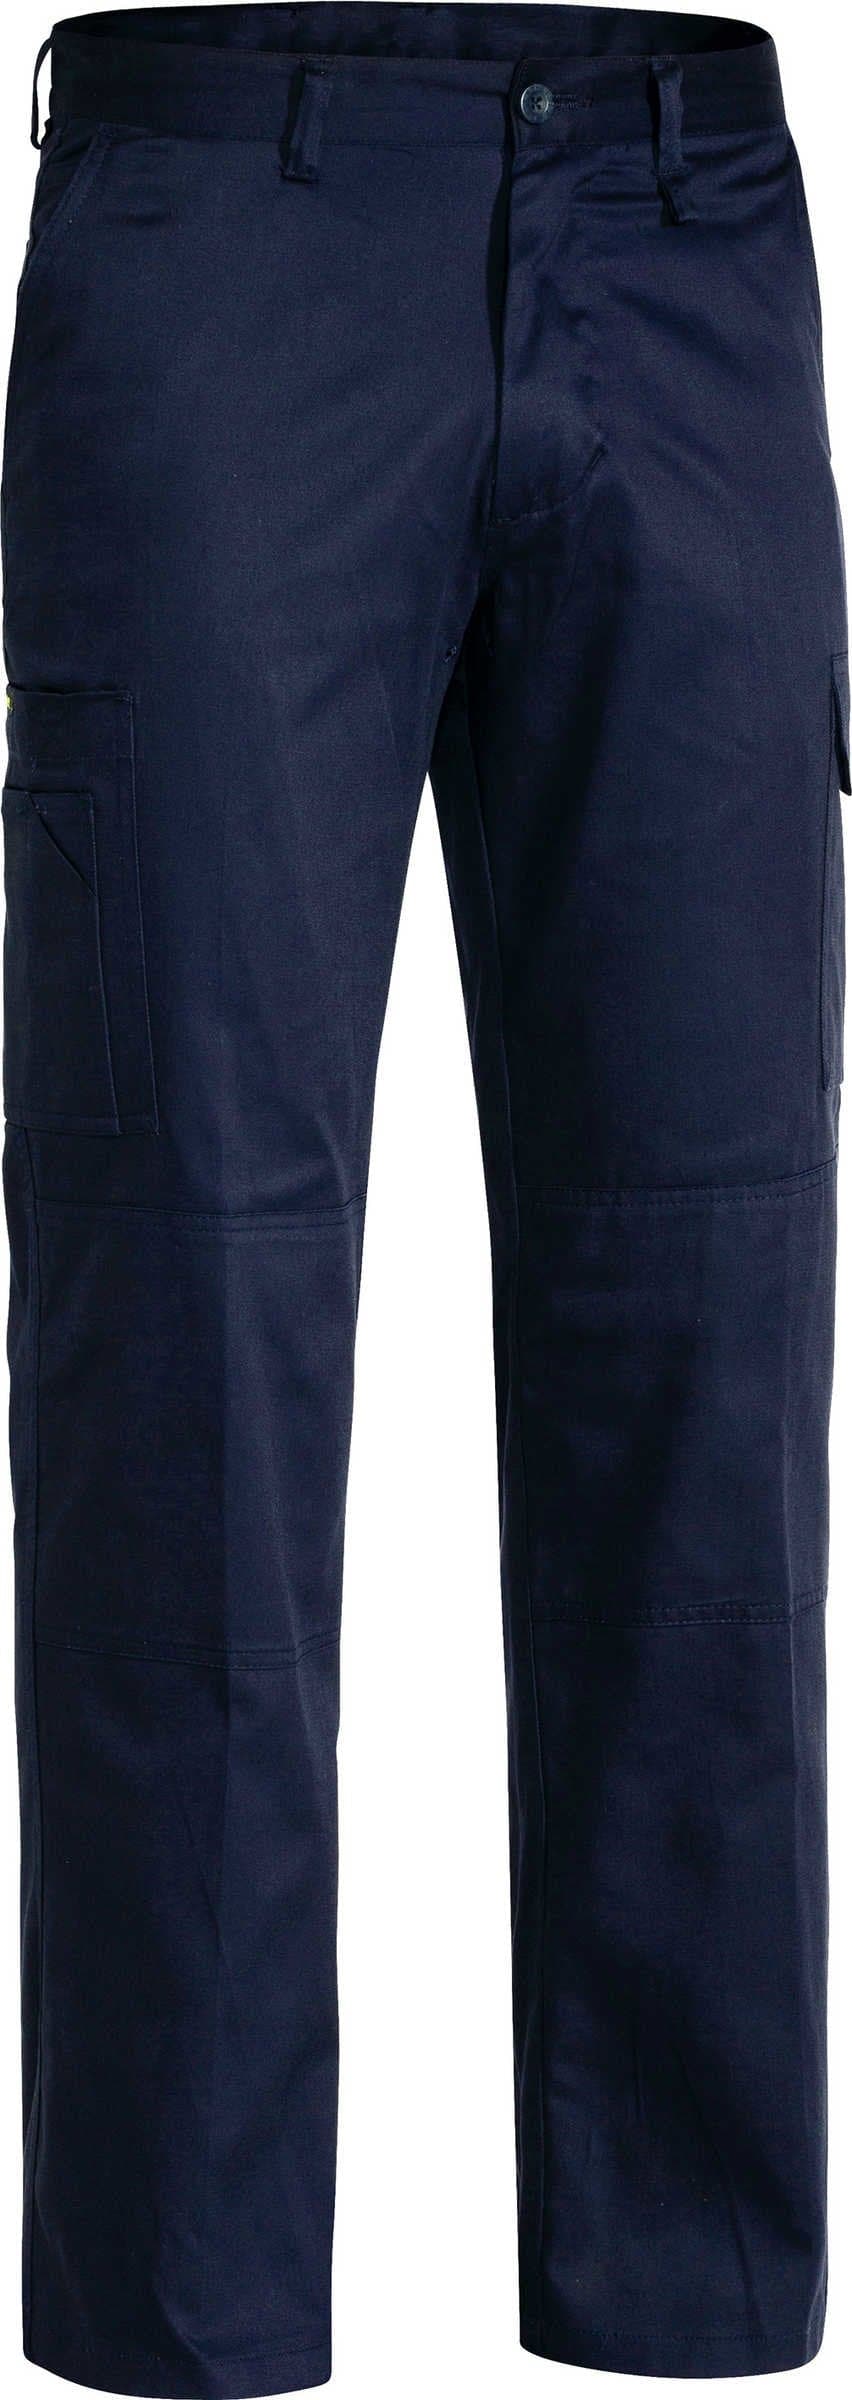 Bisley Cool Lightweight Drill Pants - Navy (BP6899) - Trade Wear